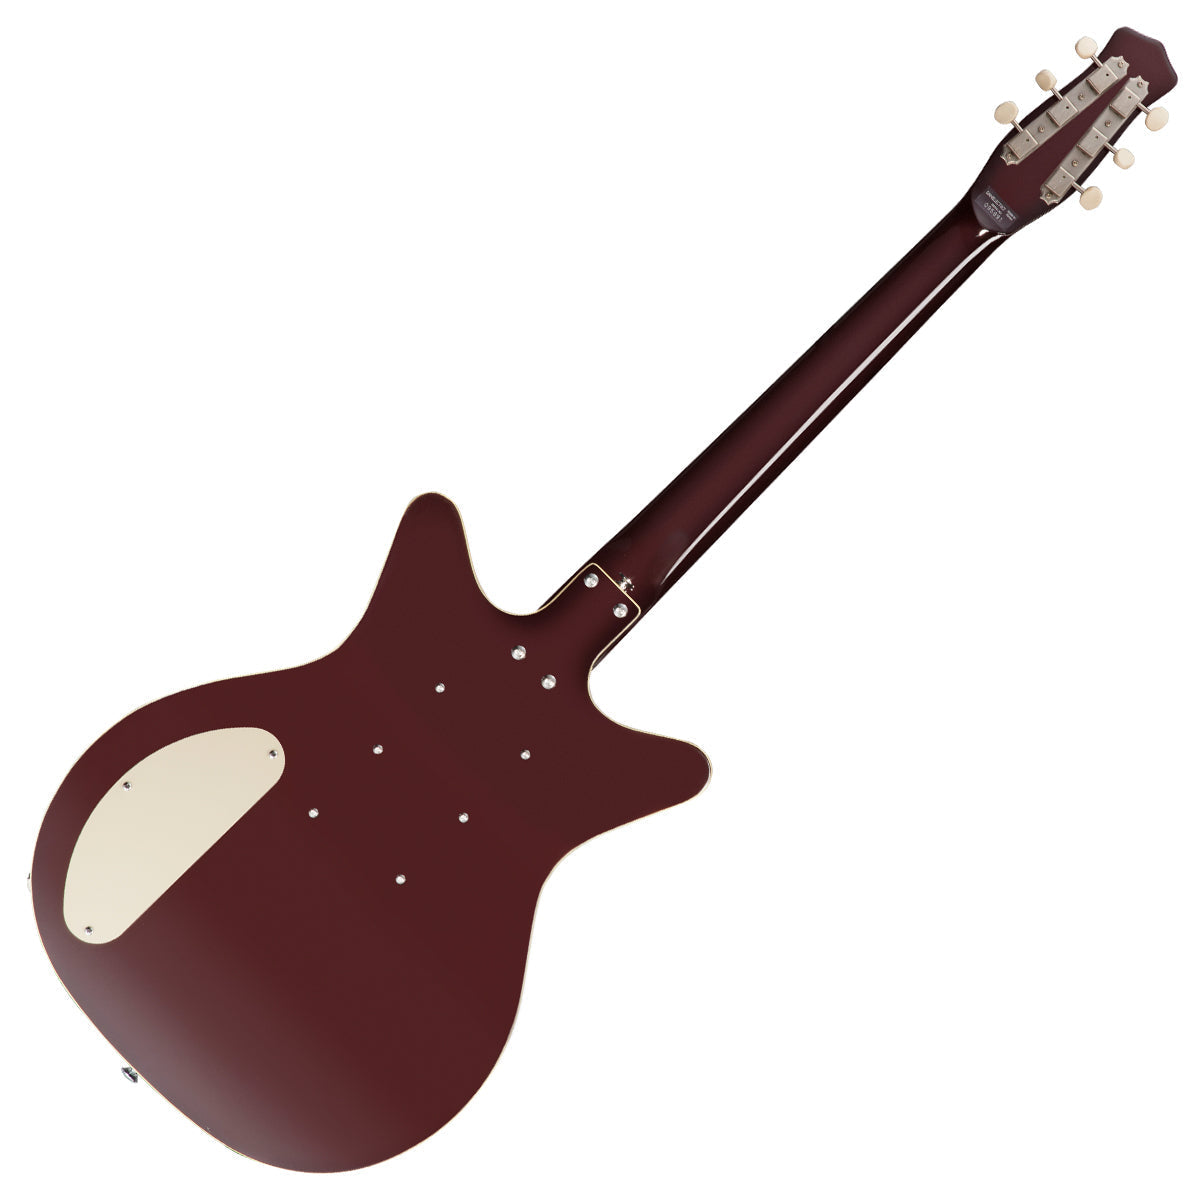 Danelectro Triple Divine Guitar ~ Dark Burgundy, Electric Guitar for sale at Richards Guitars.